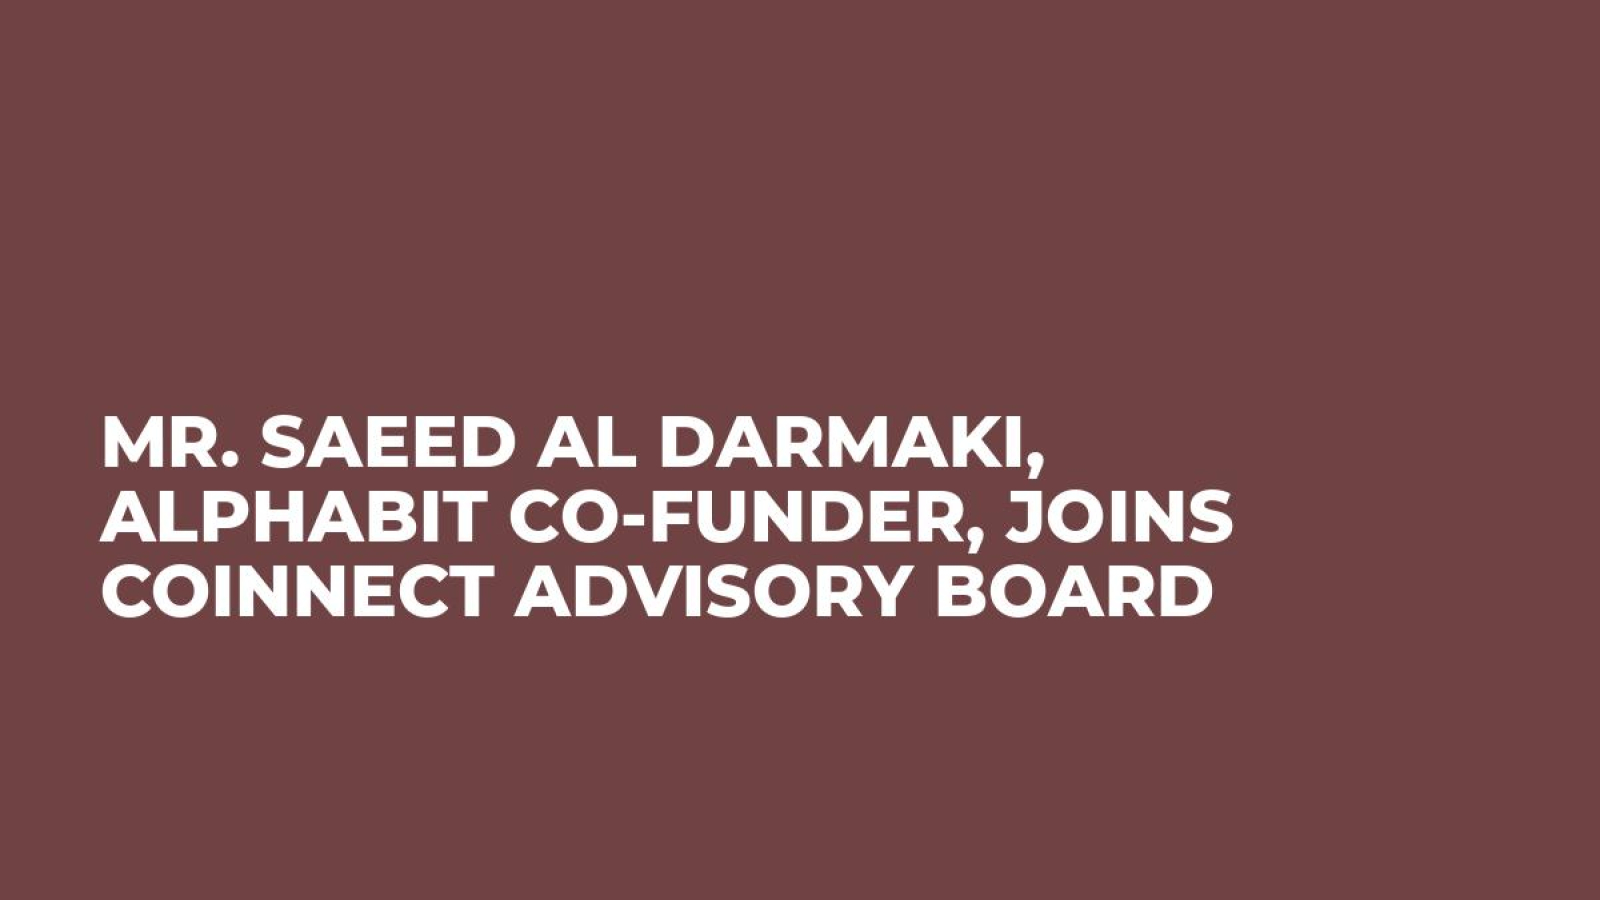 Mr. Saeed Al Darmaki, Alphabit Co-funder, joins Coinnect Advisory Board